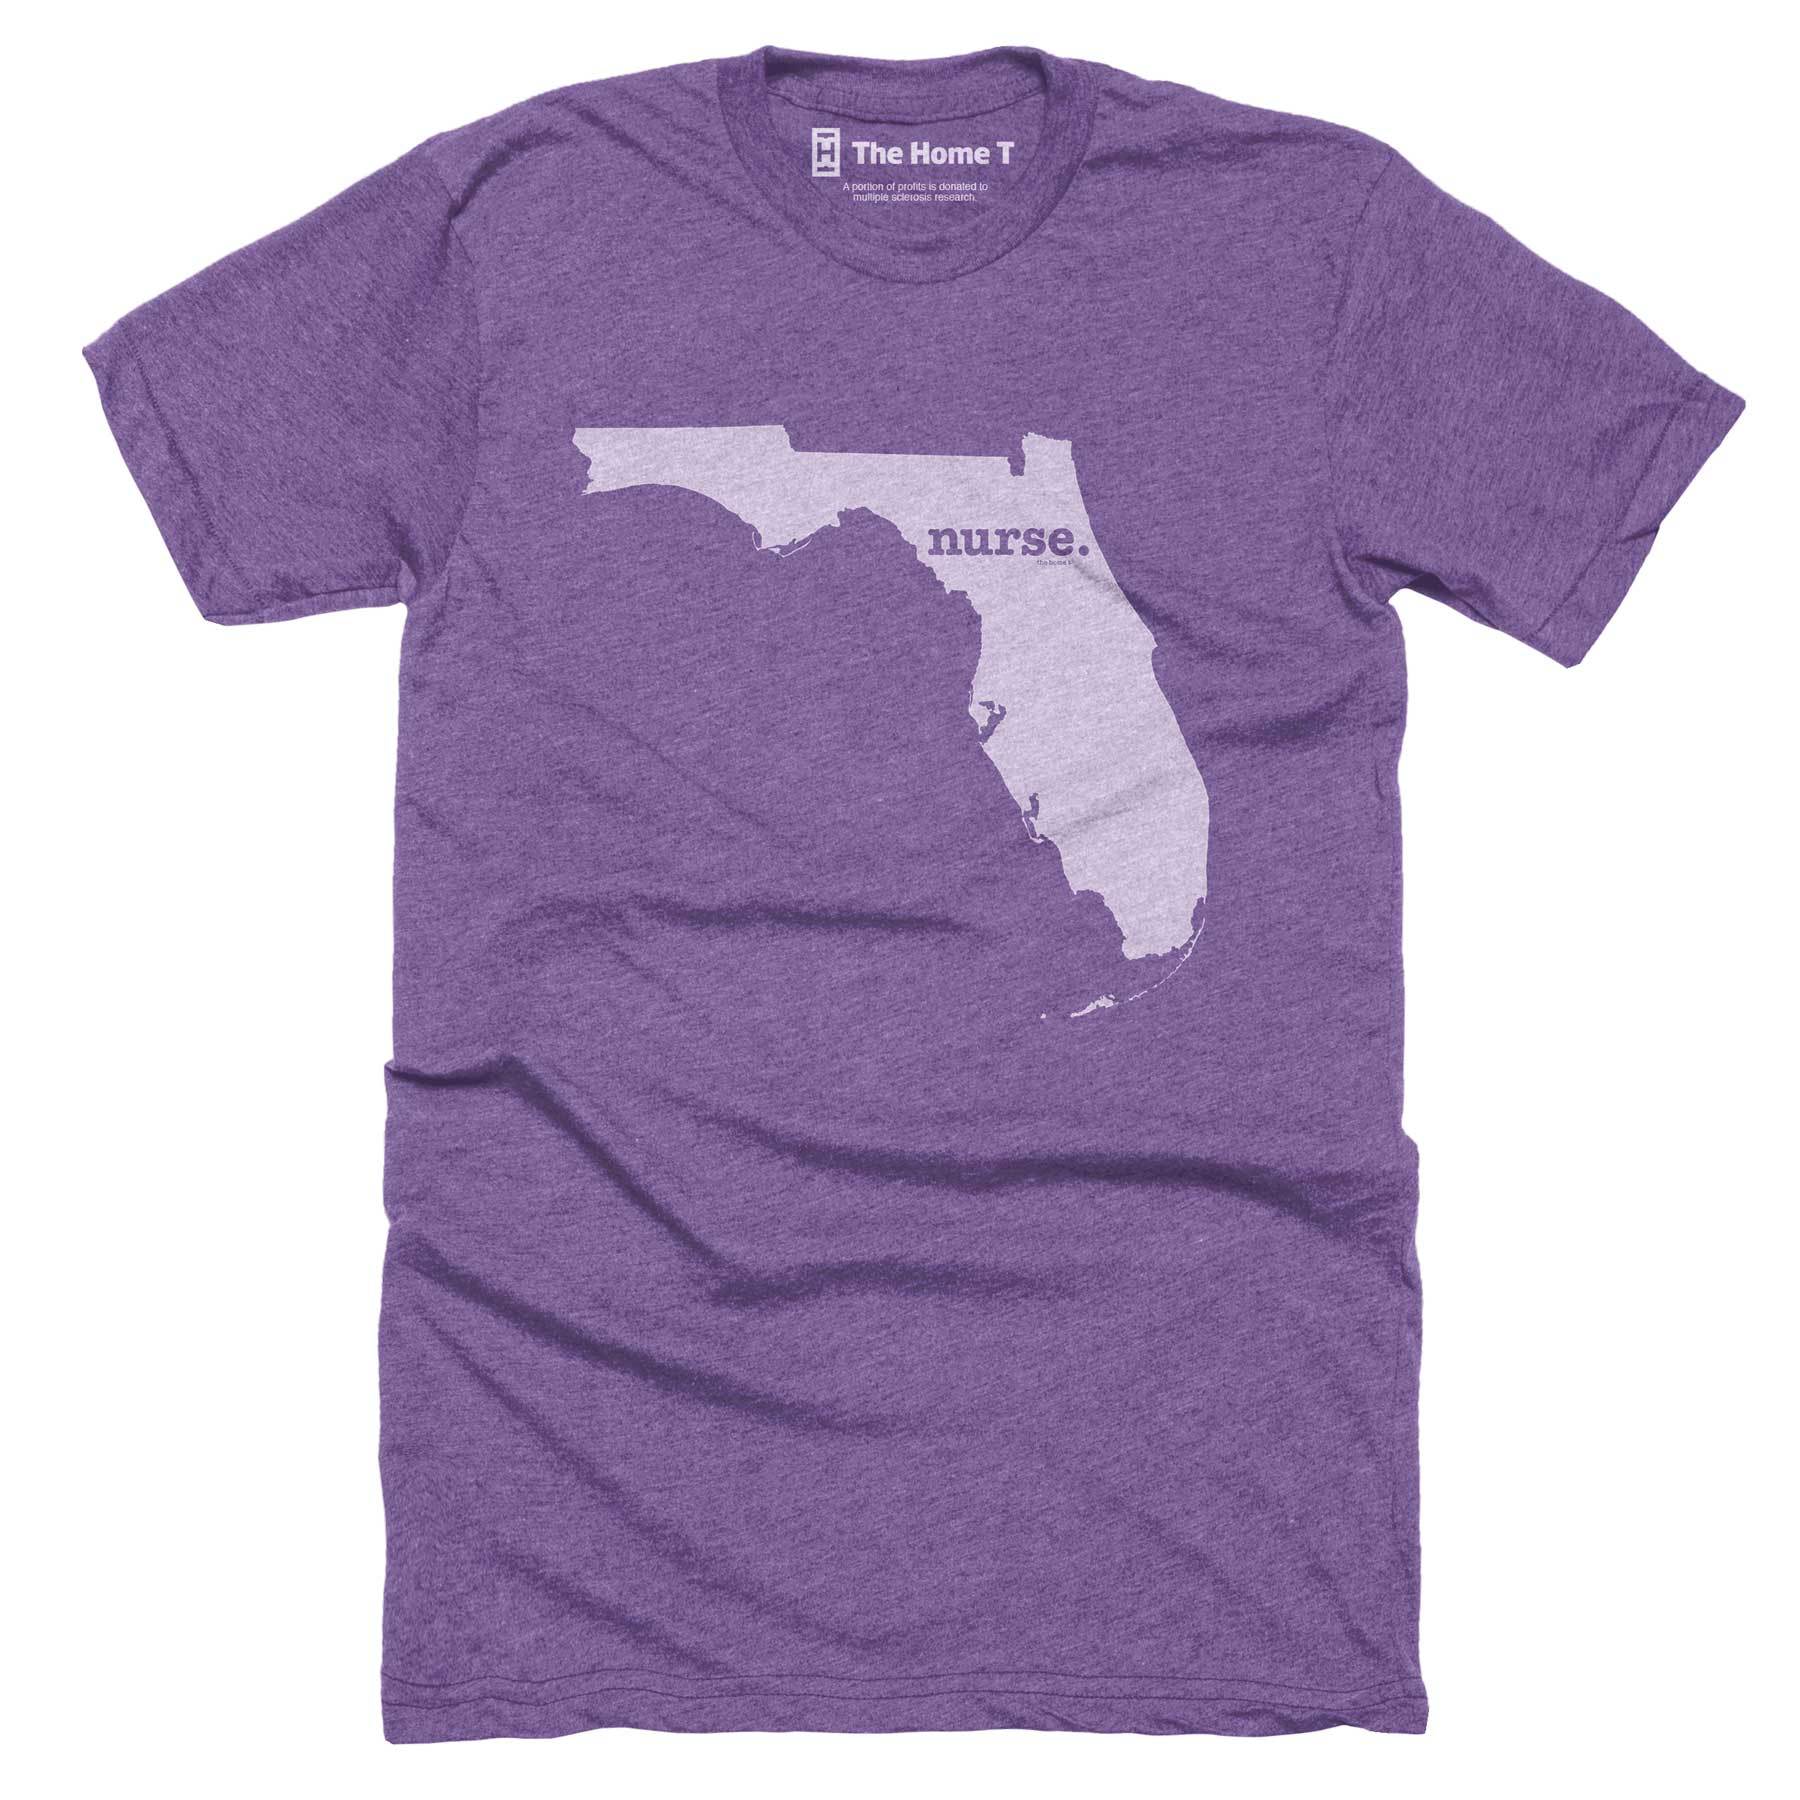 Florida Nurse Home T-Shirt Occupation The Home T